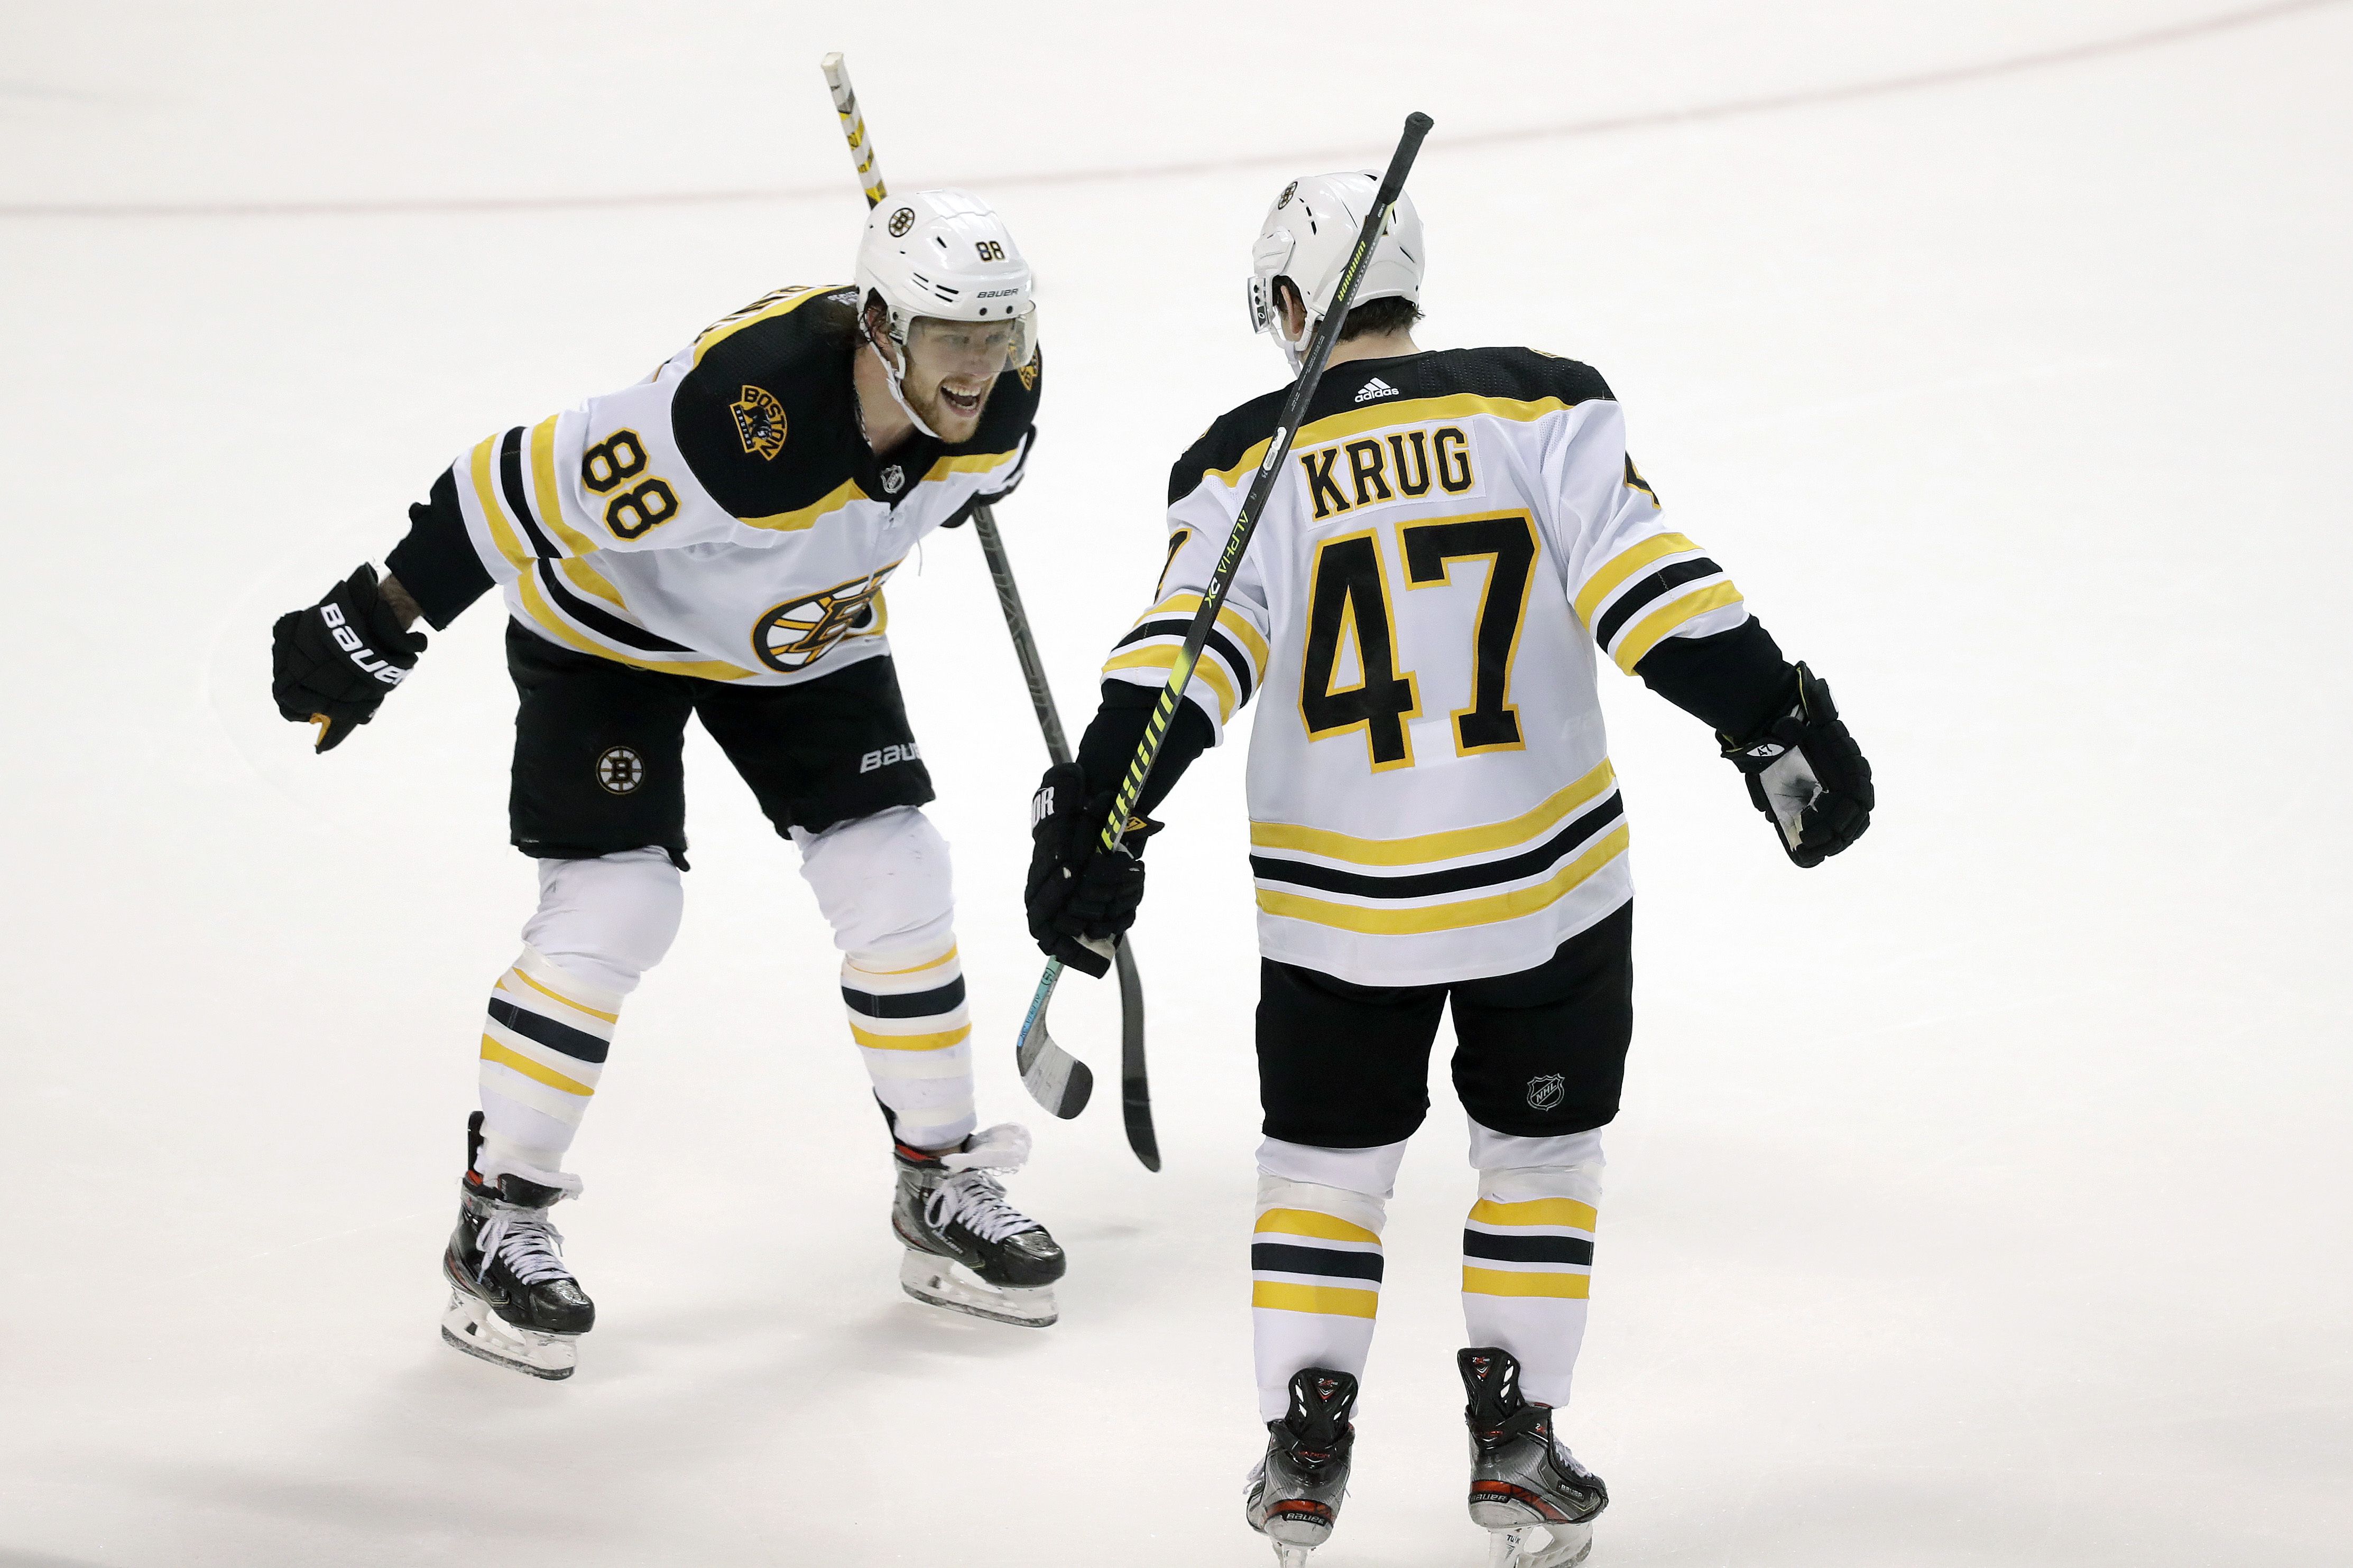 Bruins vs. Rangers Game 1 update: Overtime needed after Torey